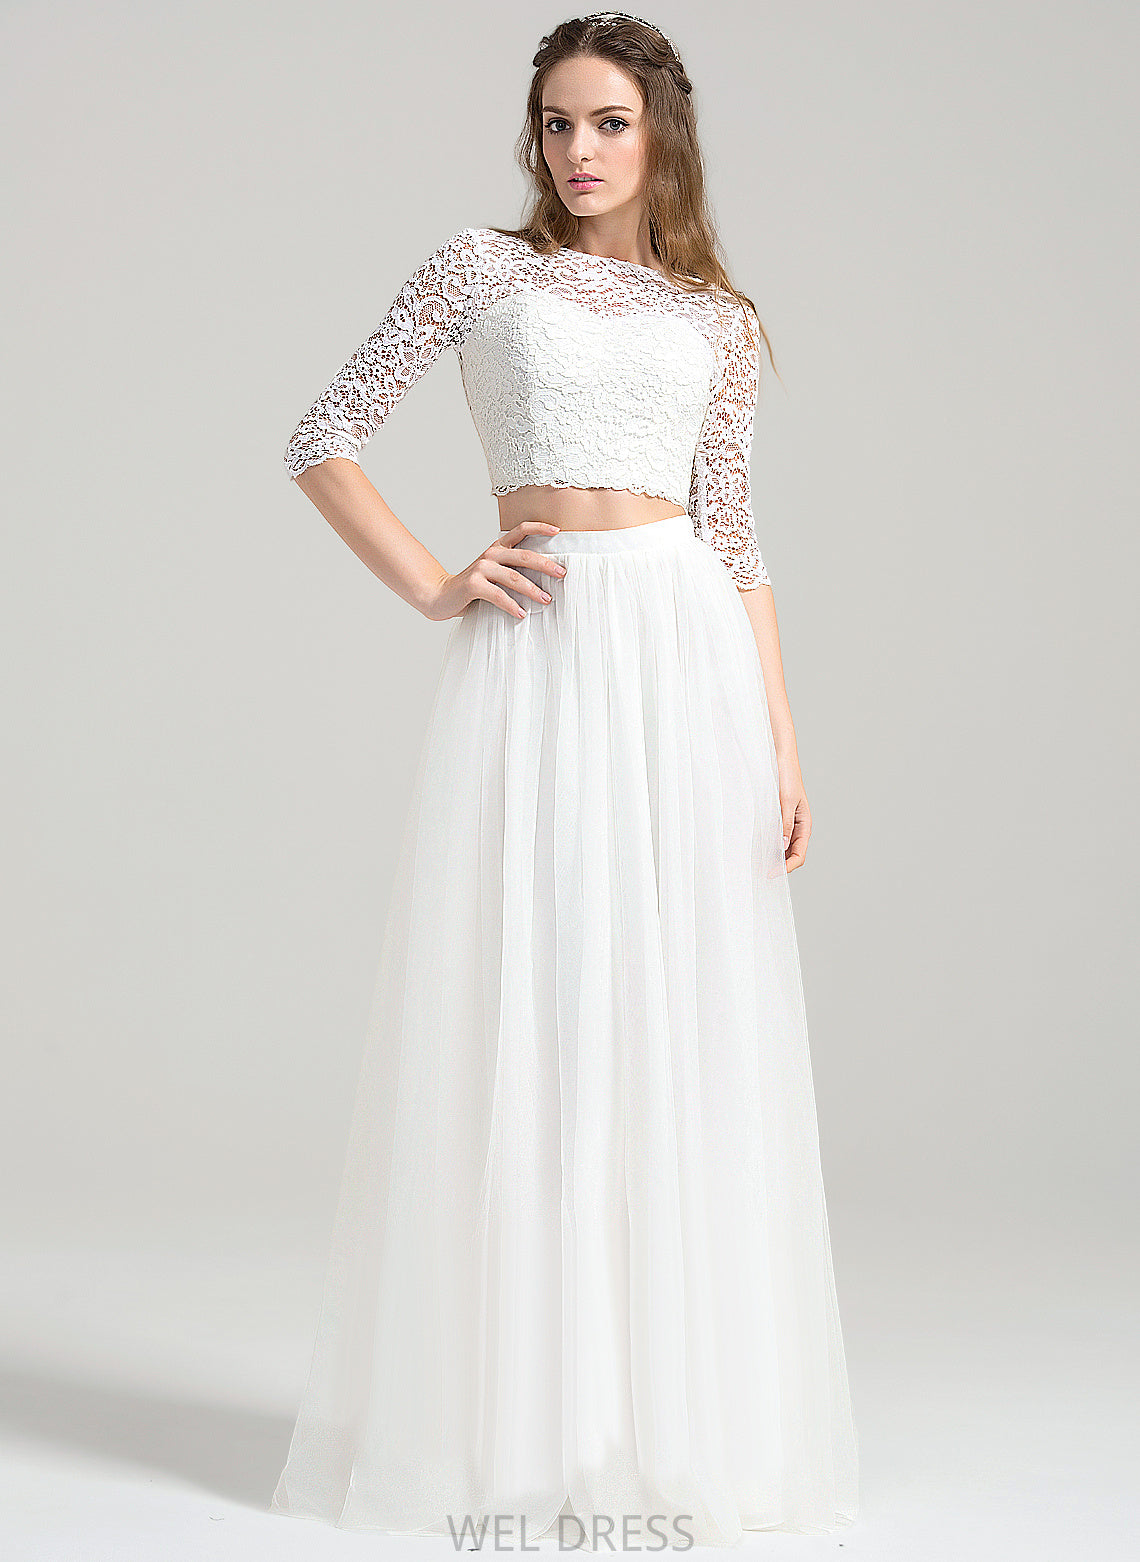 Dress Wedding Lace Taylor Tulle Floor-Length A-Line Wedding Dresses